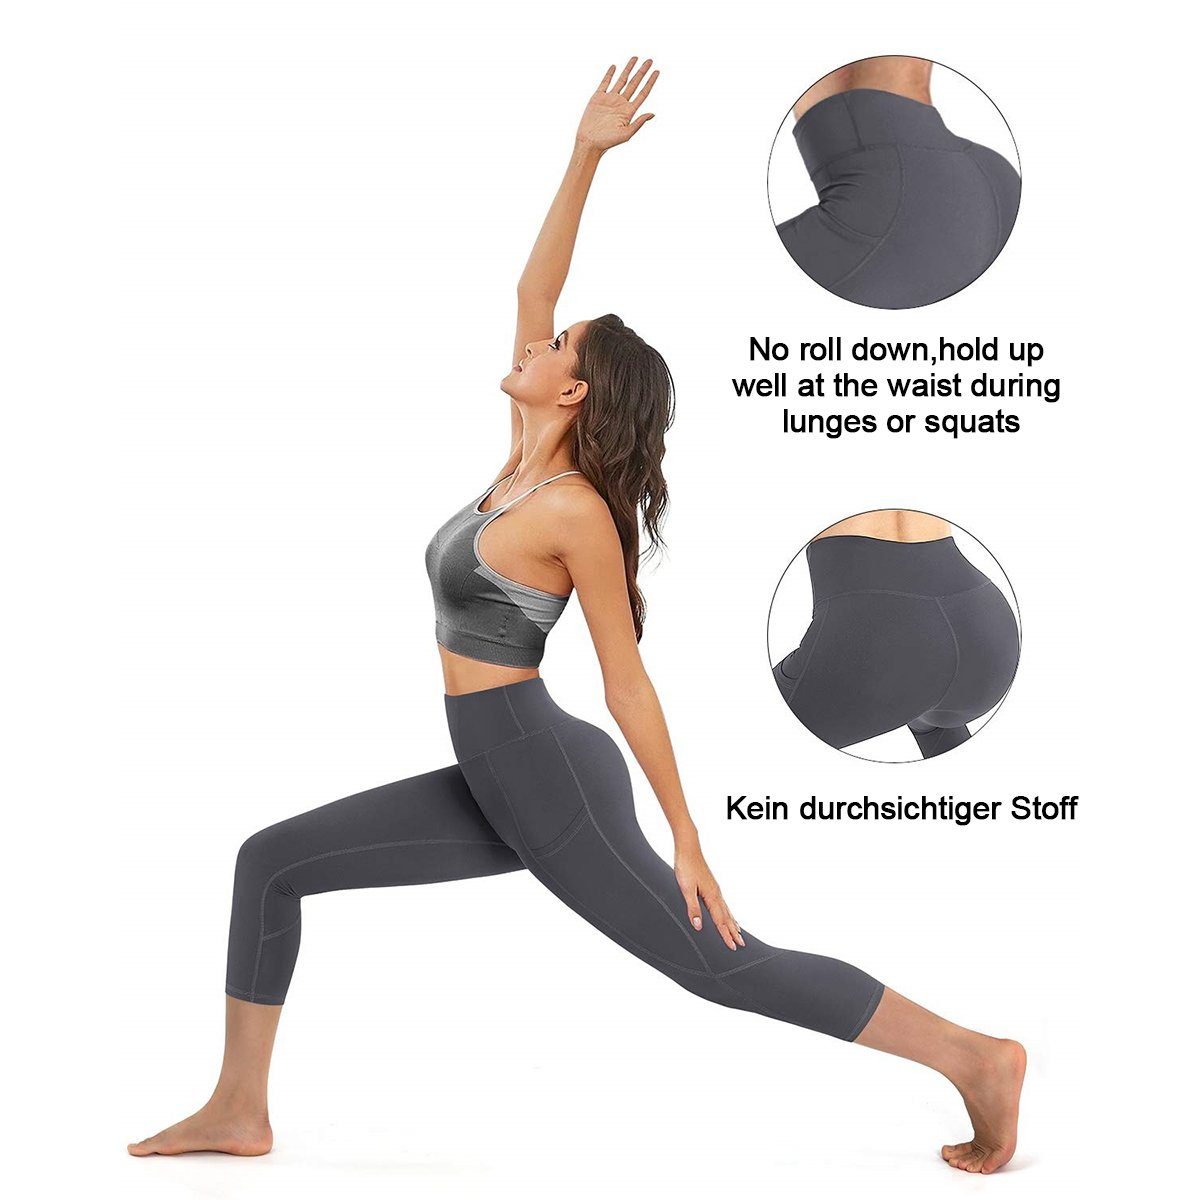 Damen-Yogahose Yogahose G4Free Fitness-Laufleggings Taille mit hoher Taschen, Grau